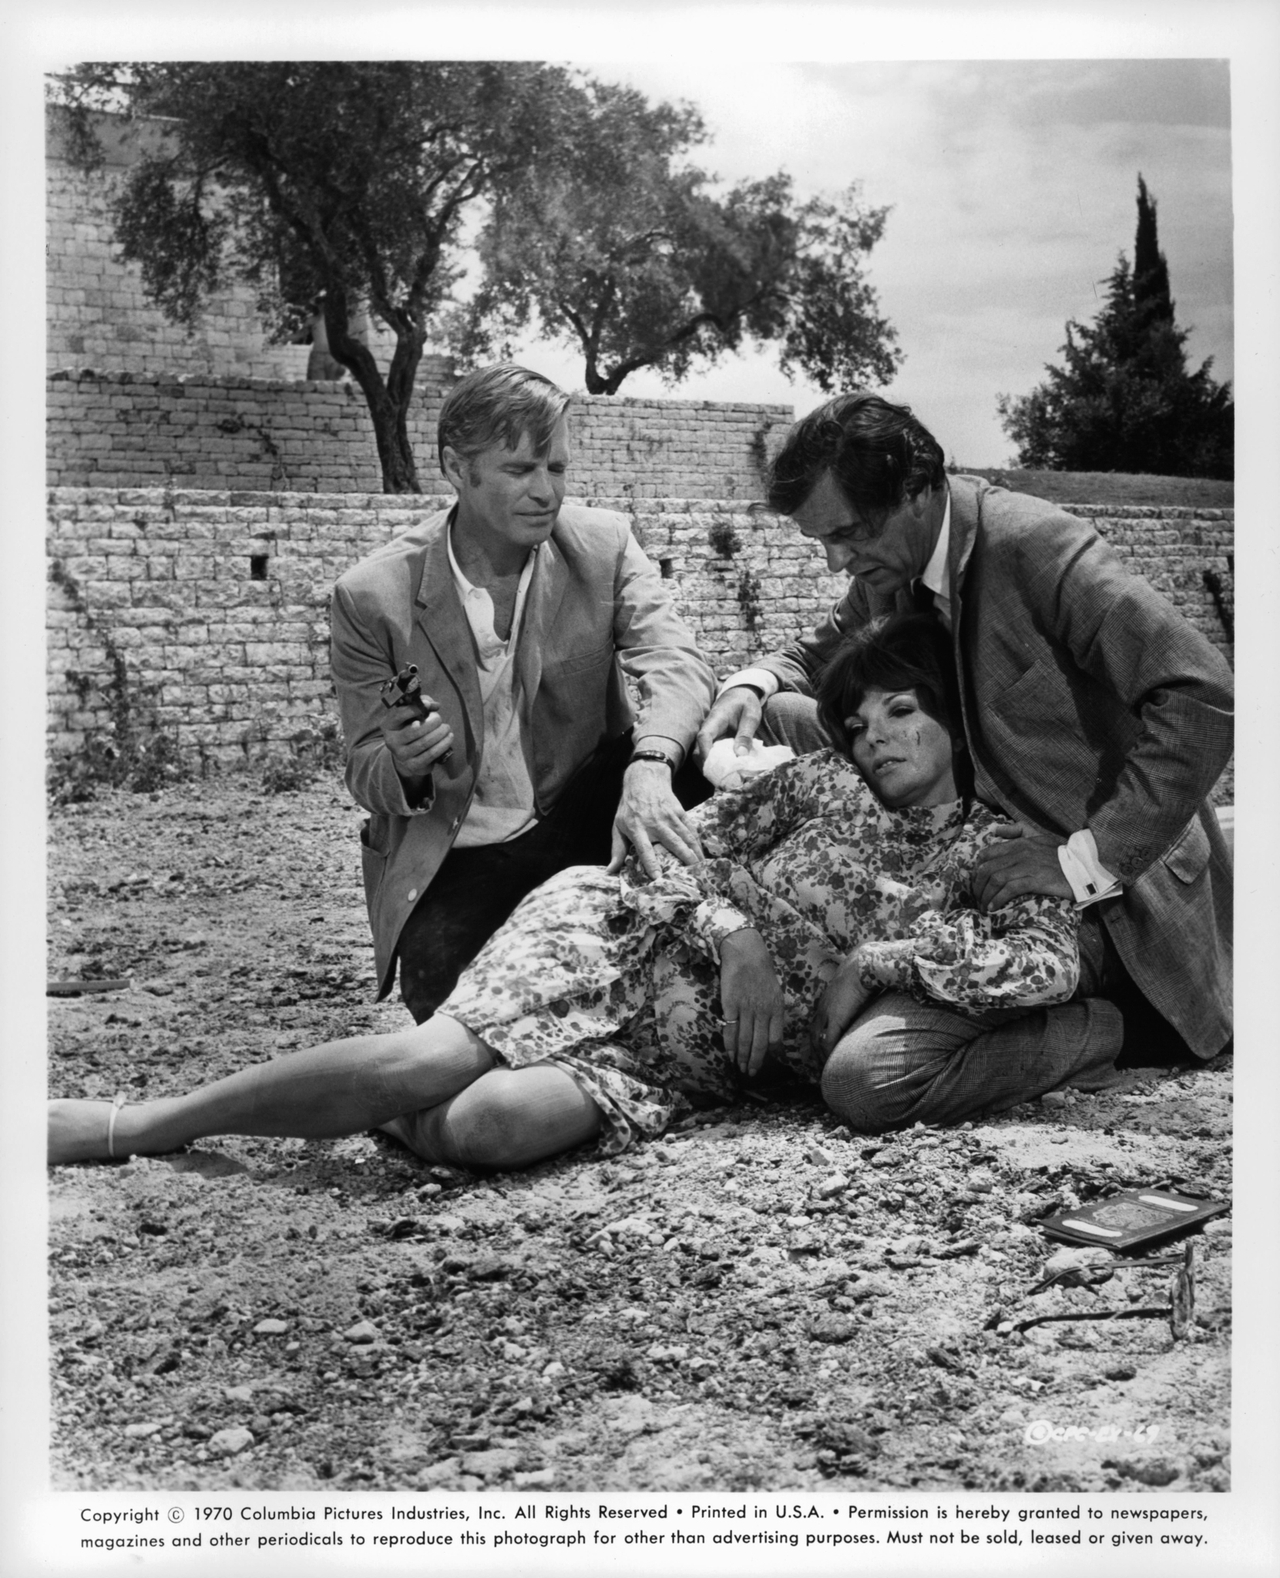 Joan Collins در صحنه فیلم سینمایی The Executioner به همراه George Peppard و George Baker